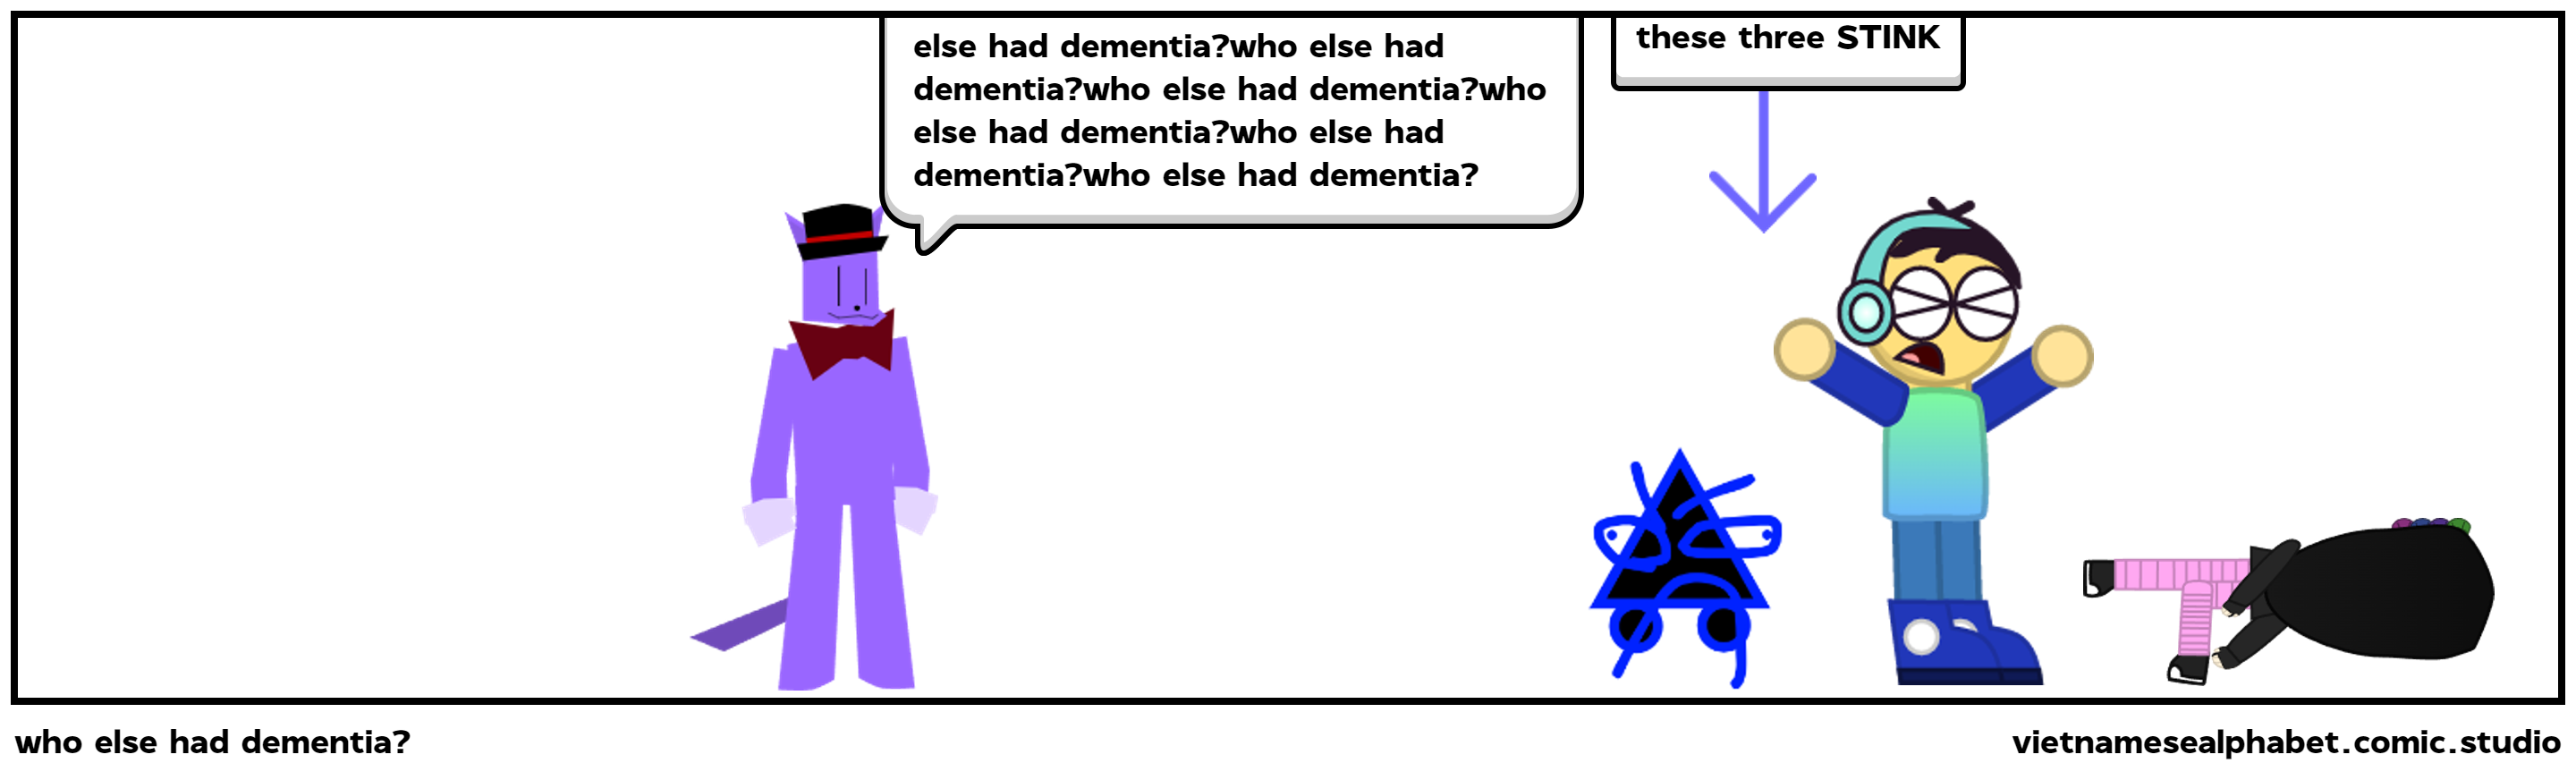 who else had dementia?